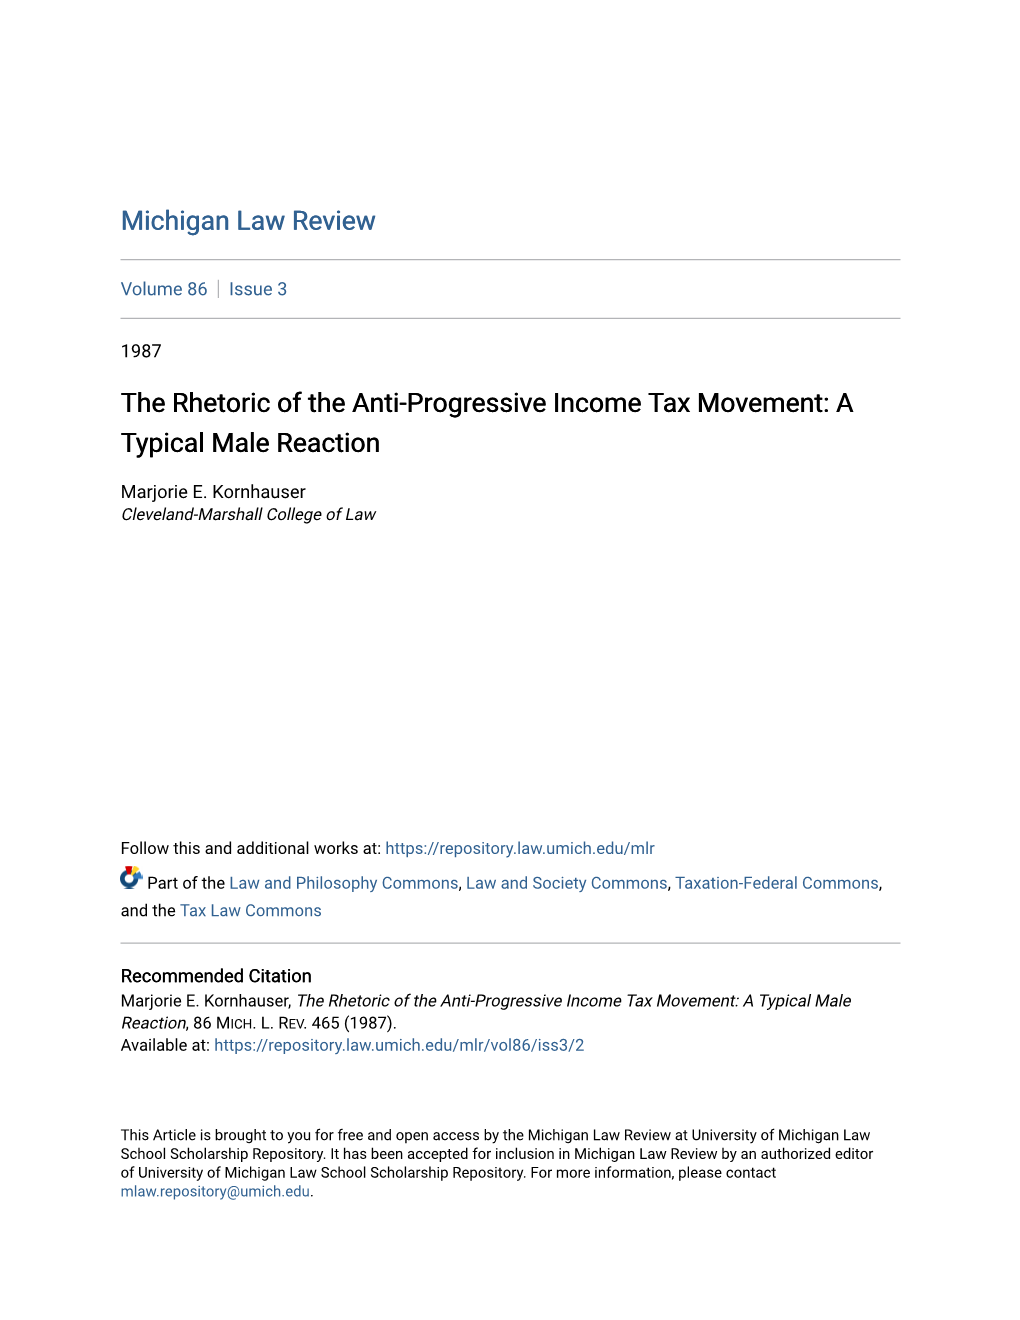 The Rhetoric of the Anti-Progressive Income Tax Movement: a Typical Male Reaction